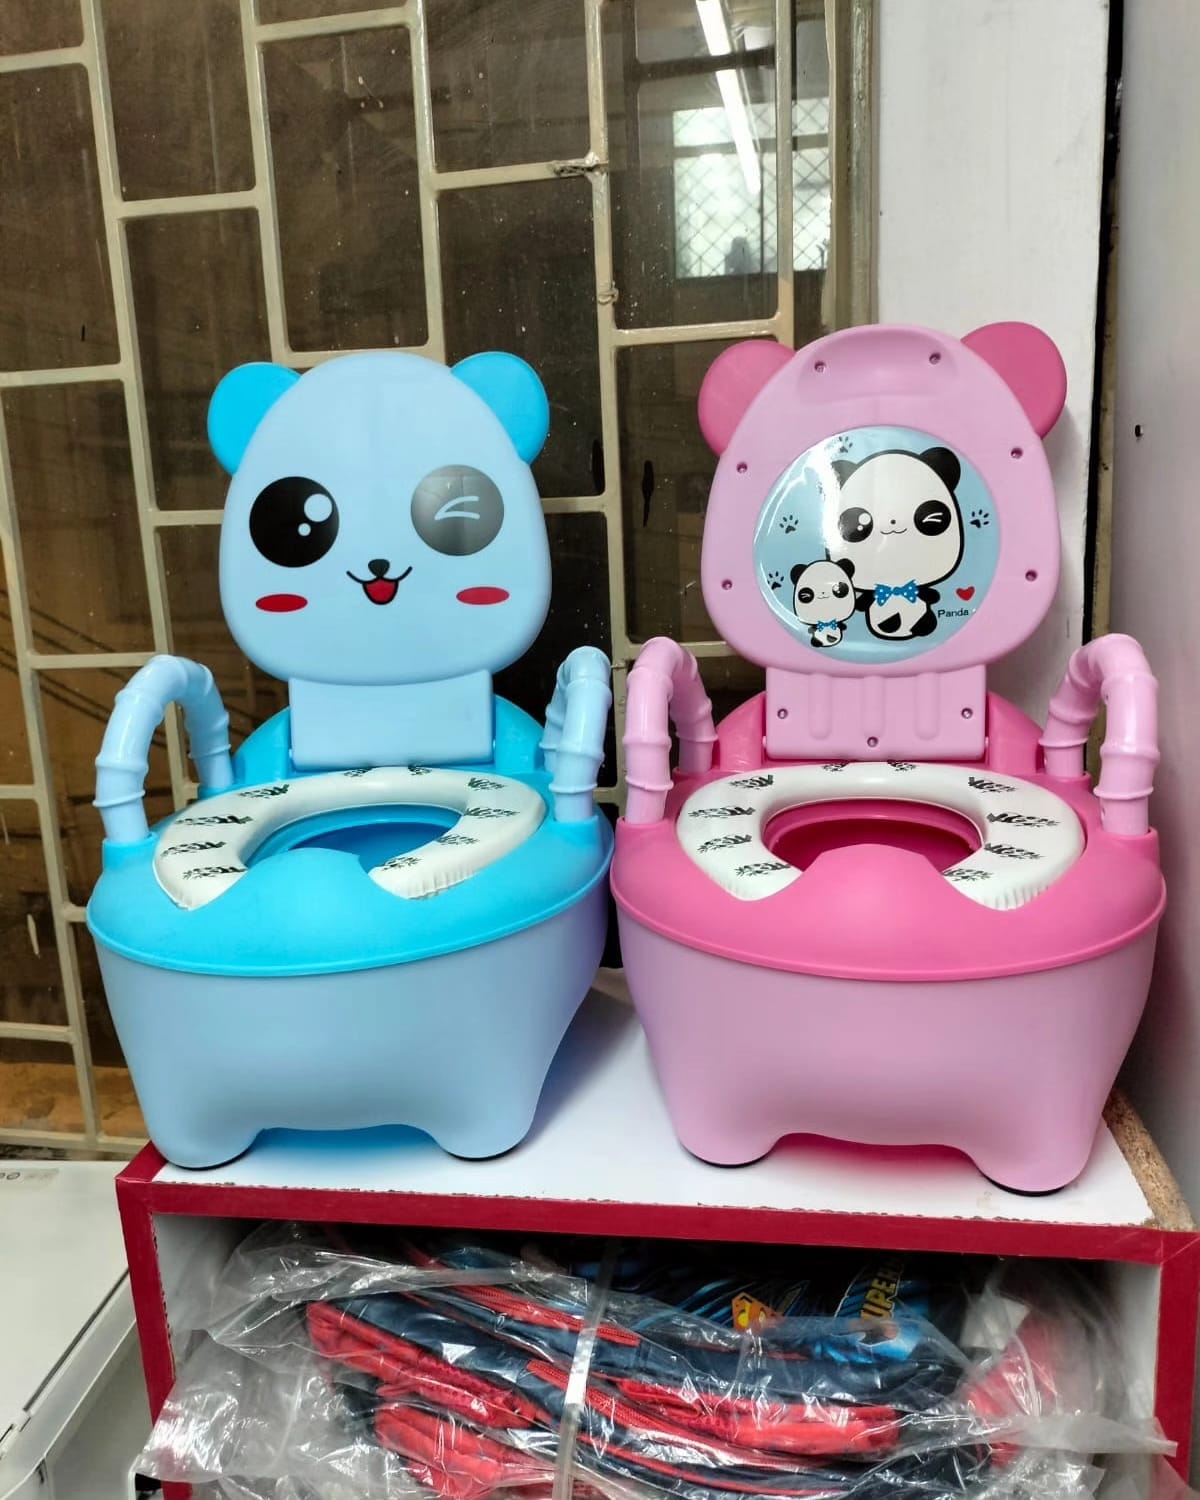 Portable baby training potty